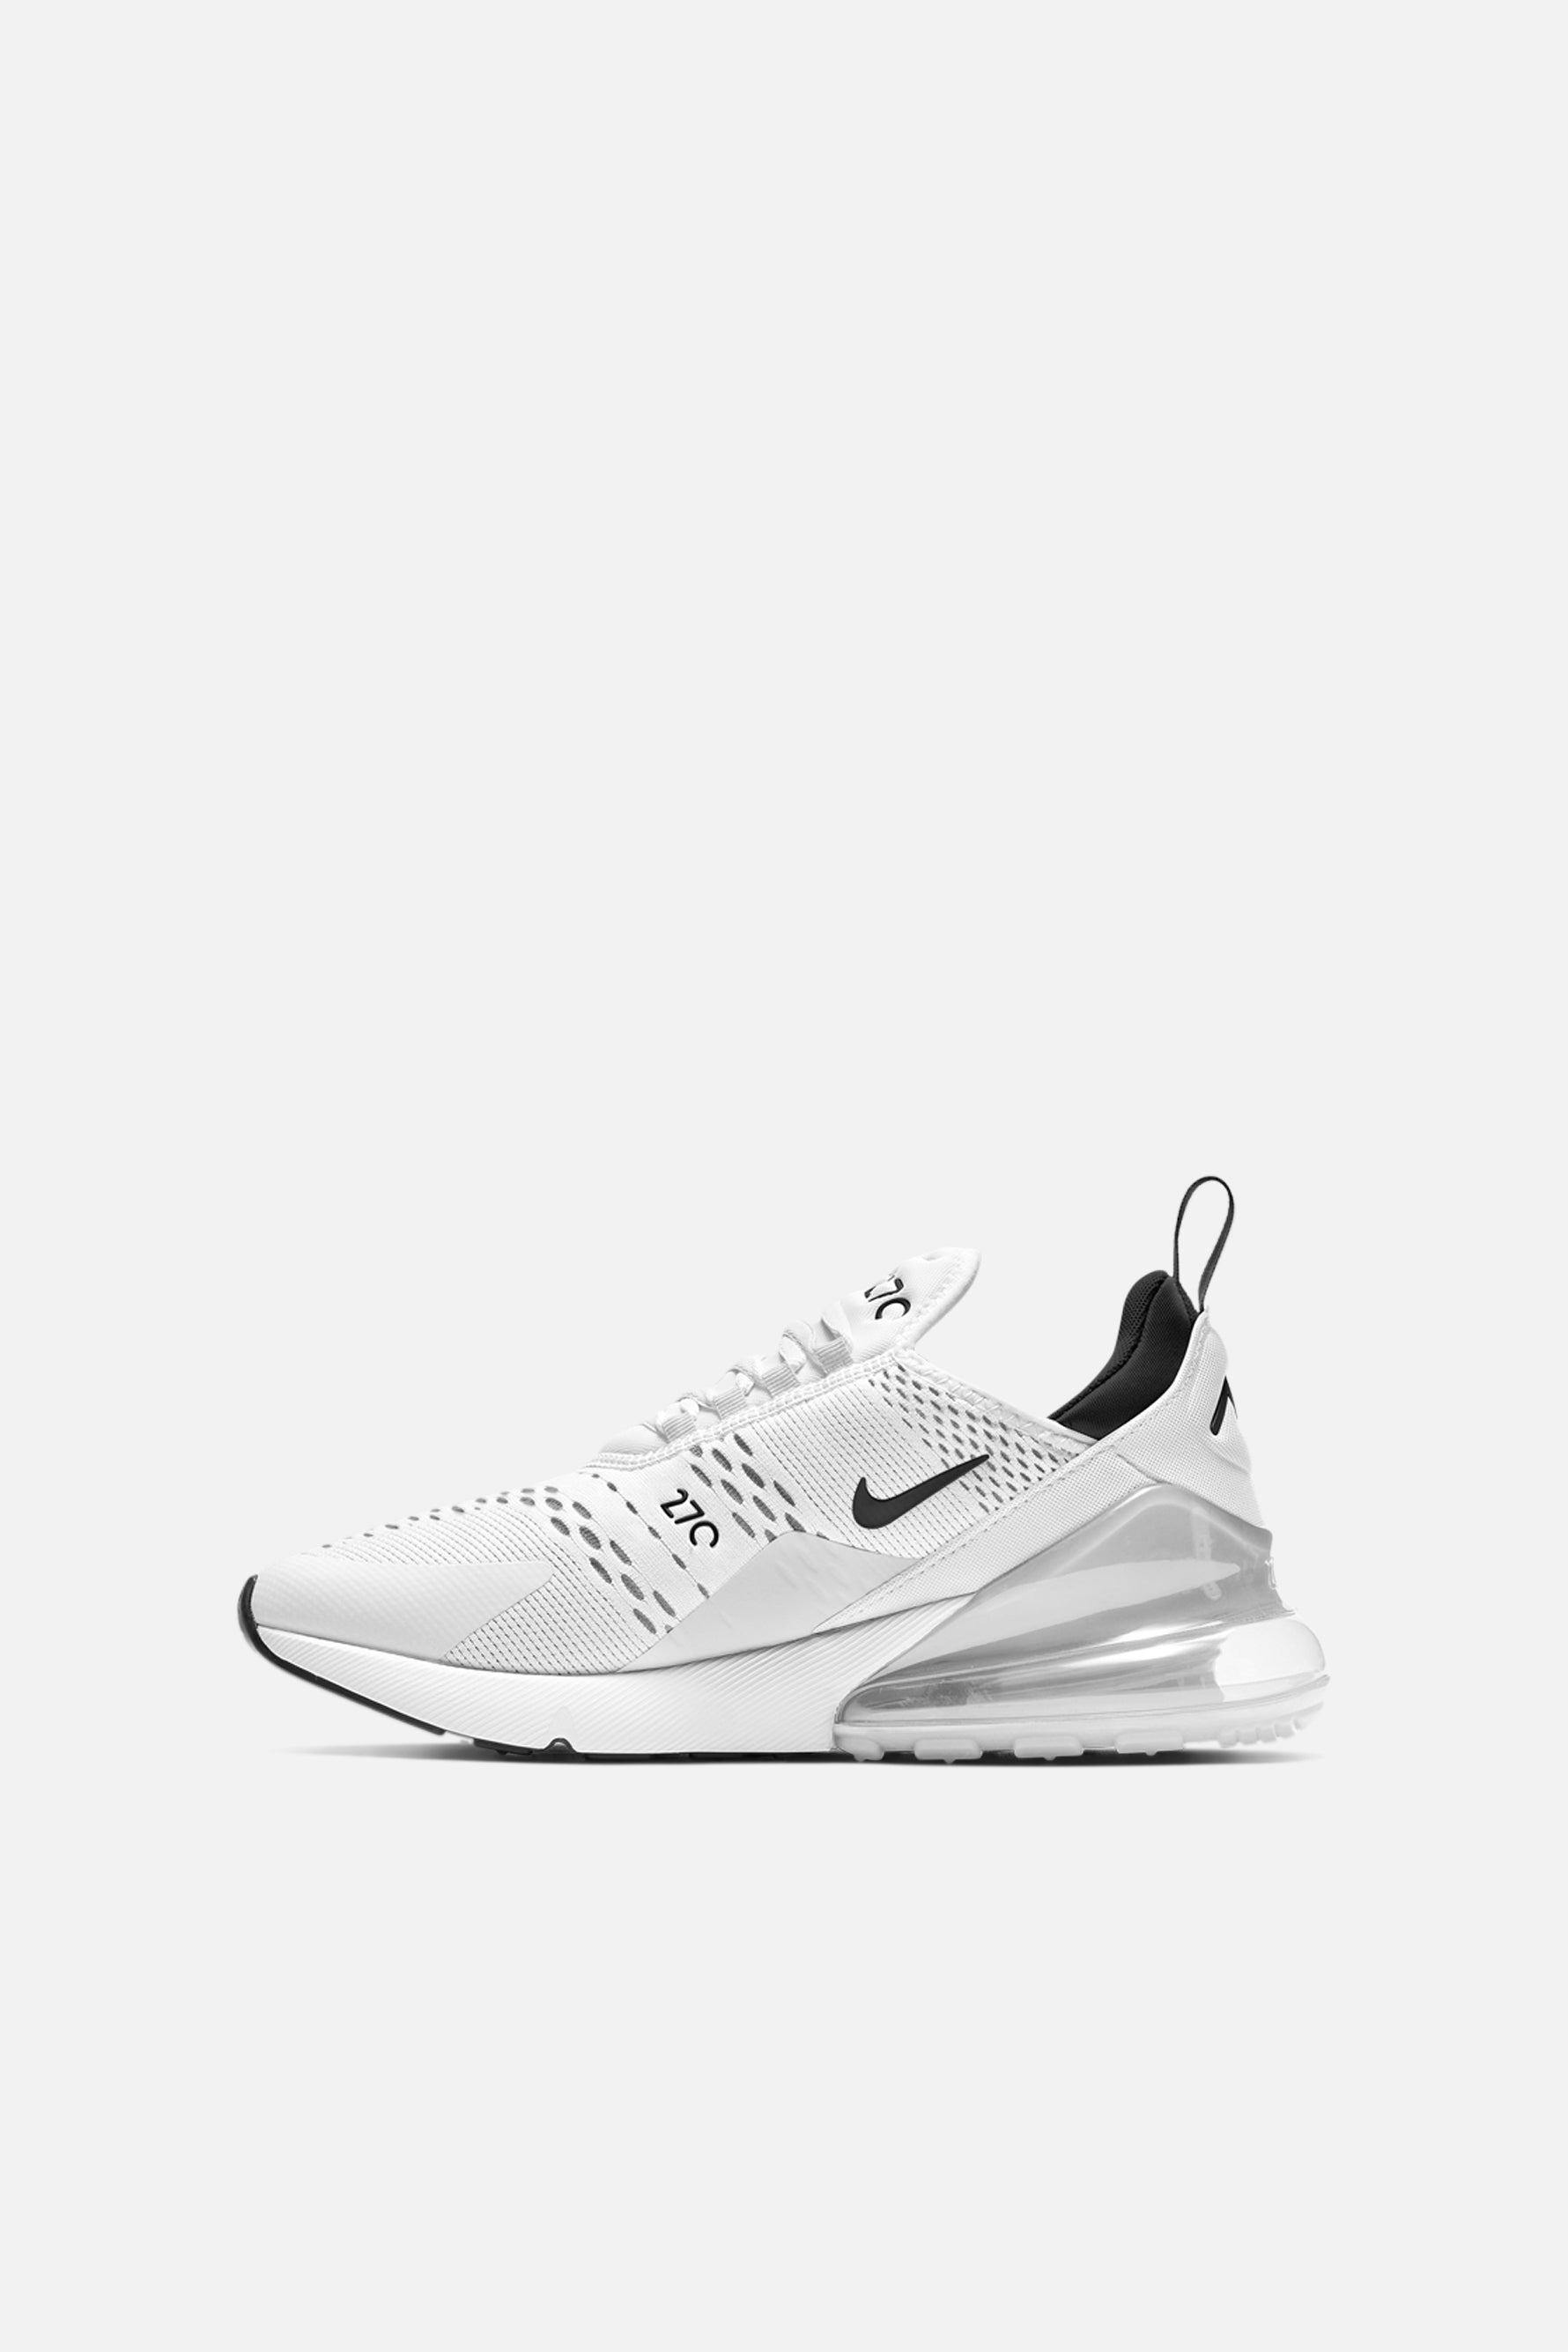 Nike Air Max 270 White/Black Women's Shoes, Size: 5.5